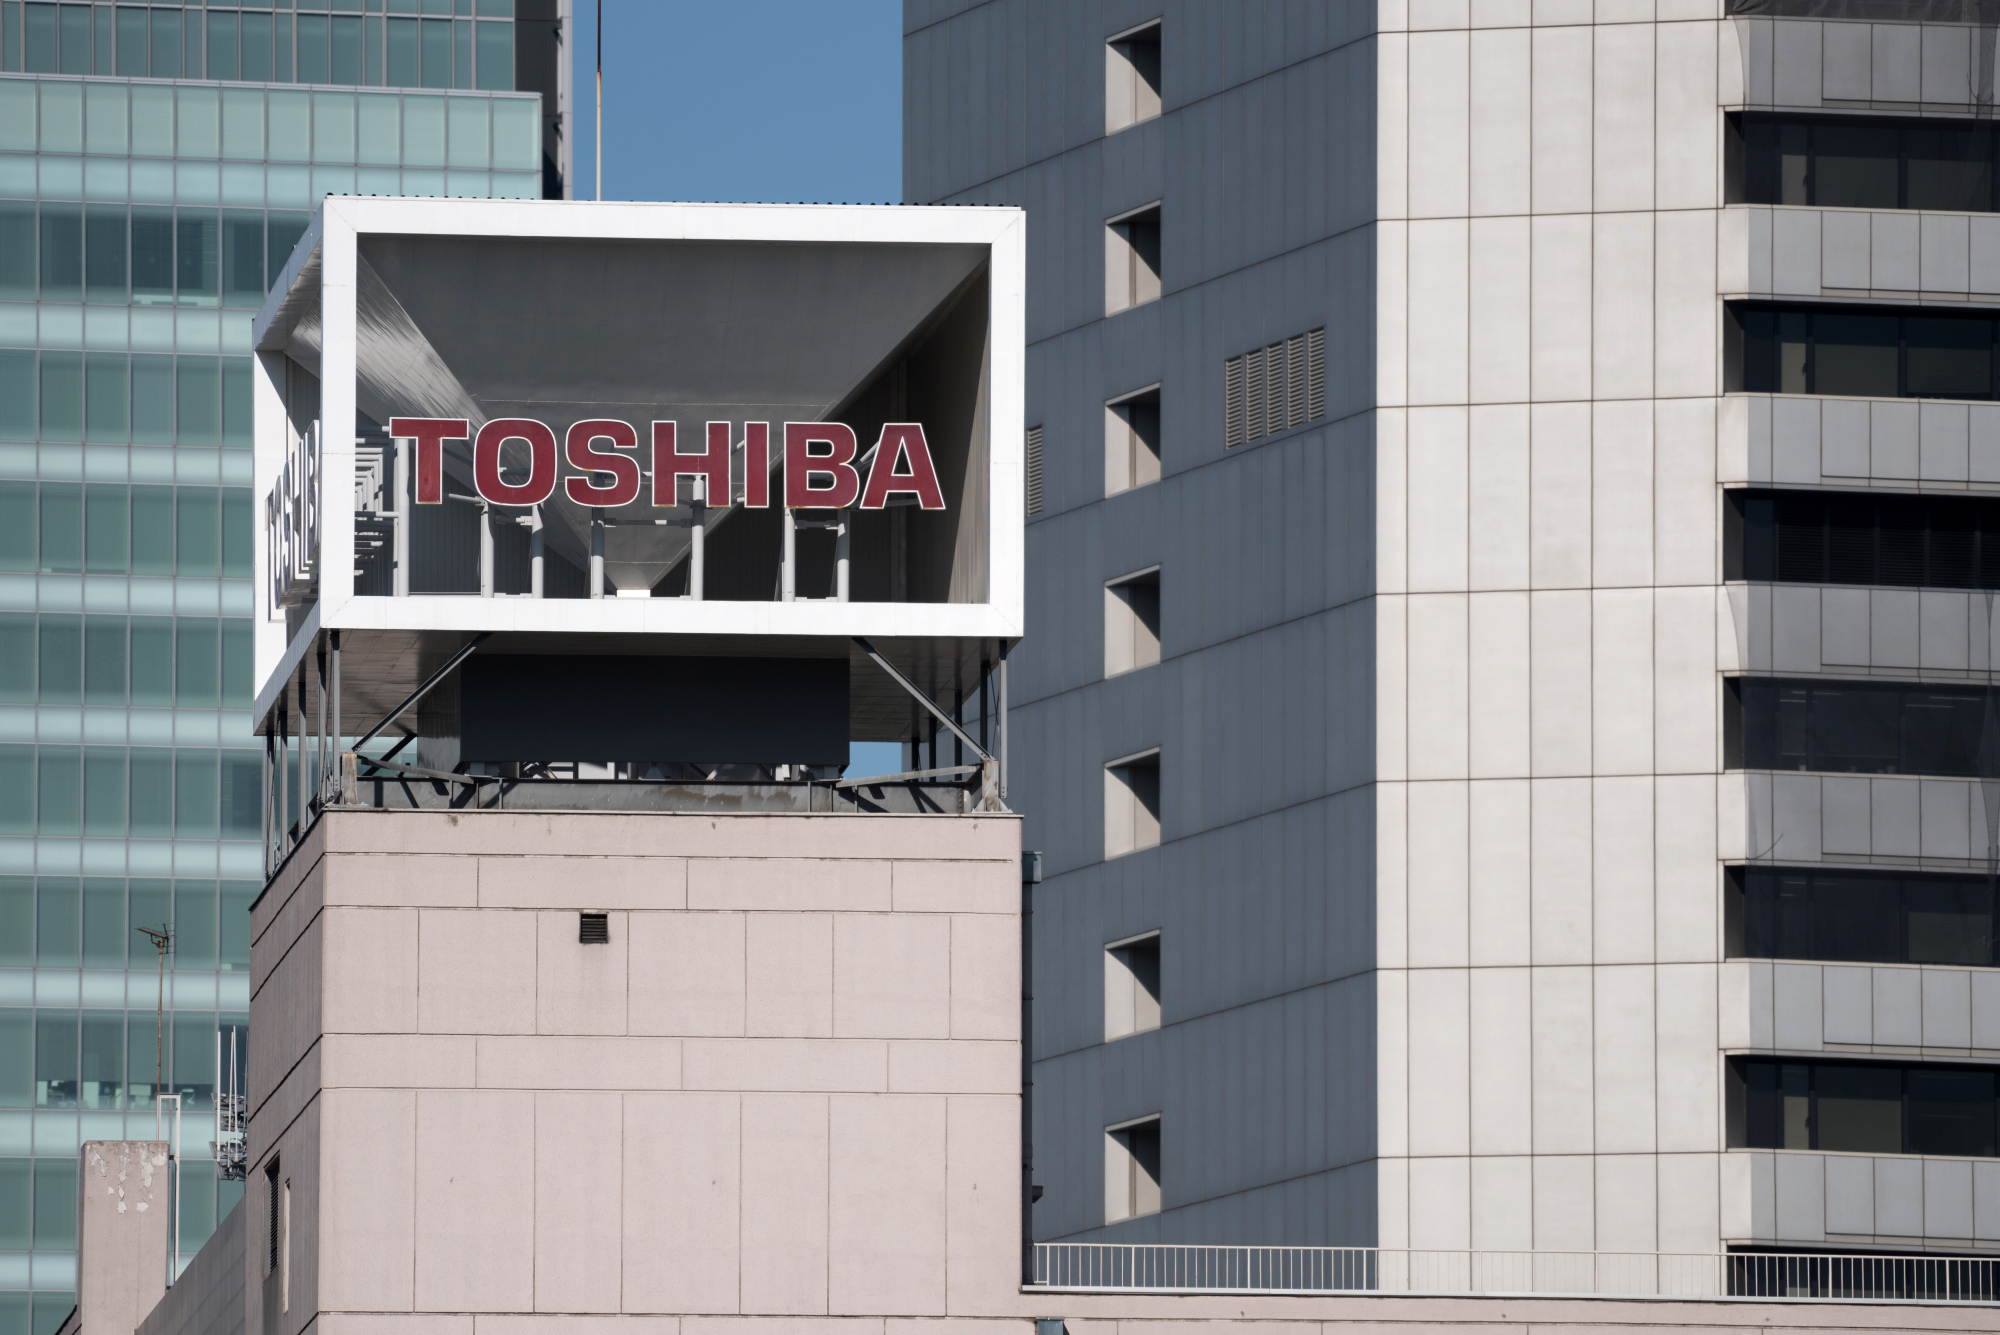 Toshiba headquarters in Tokyo.